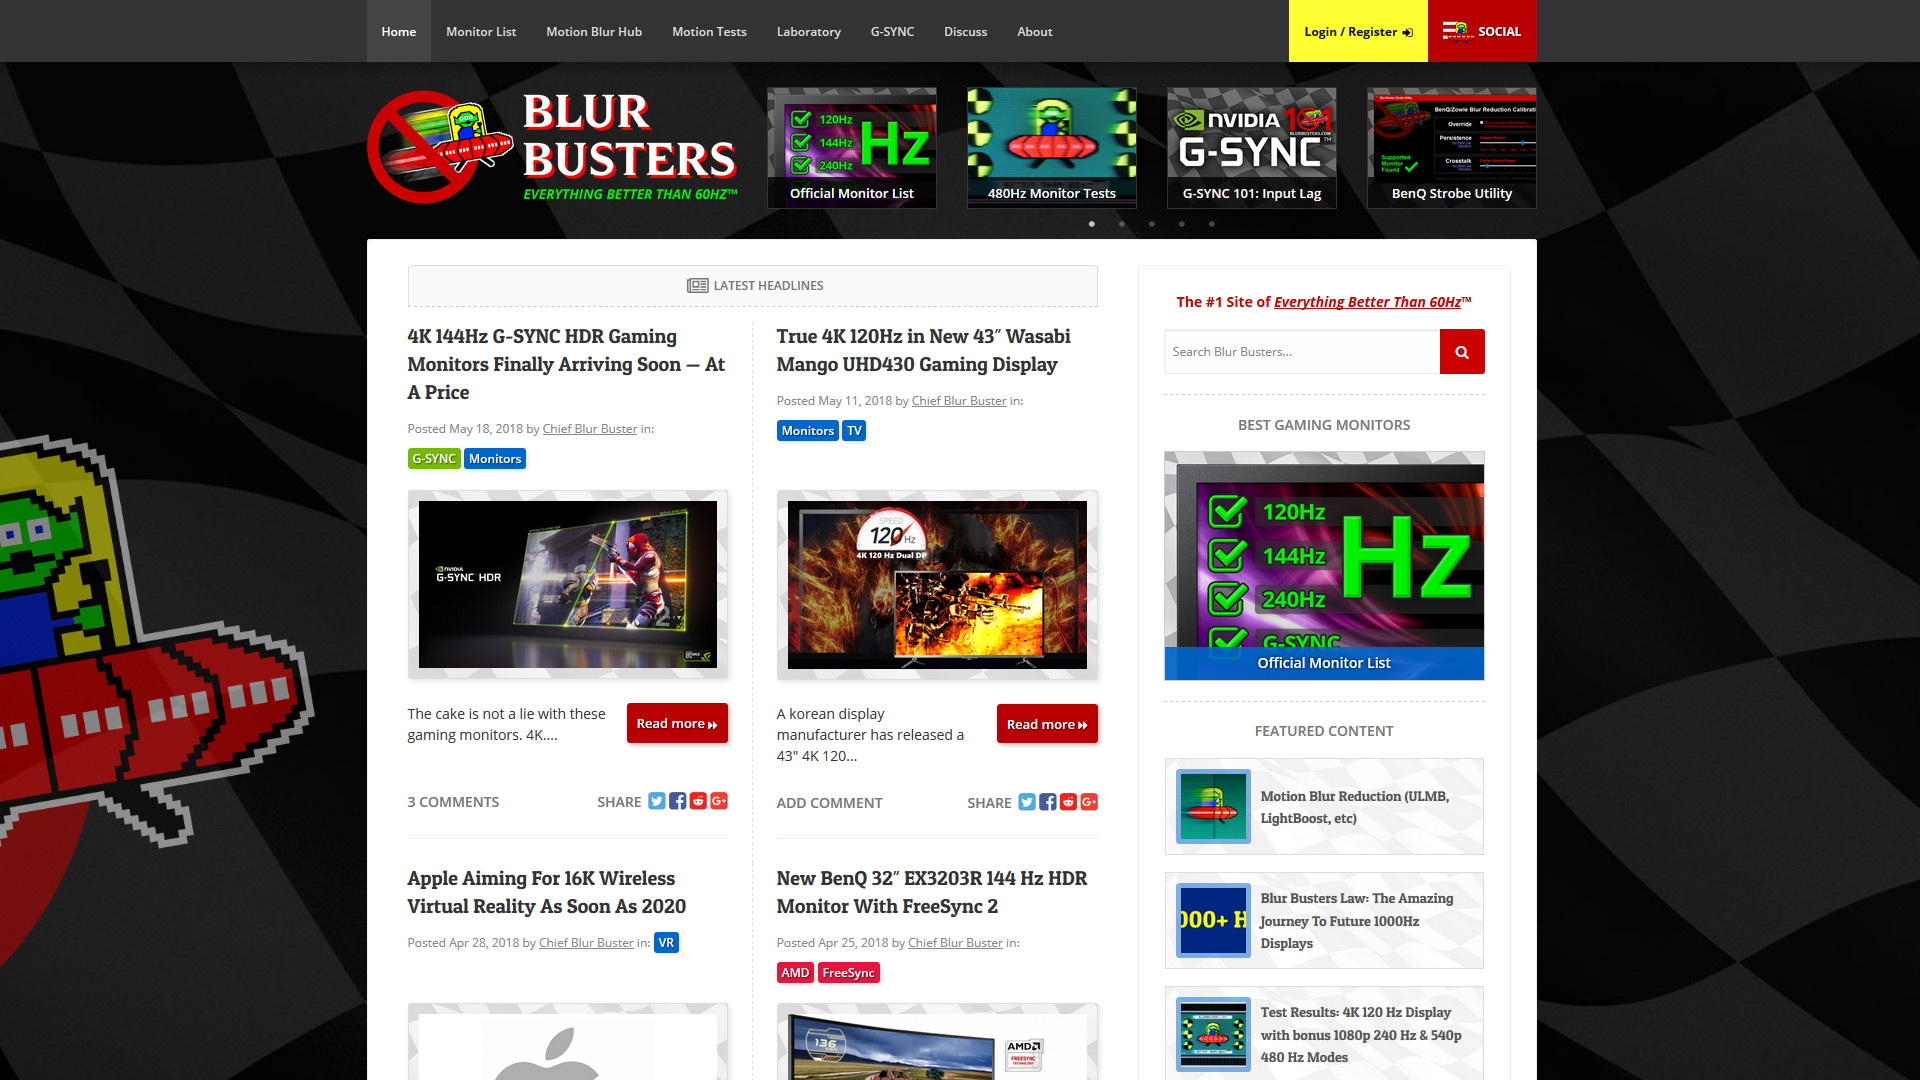 Blur Busters | blurbusters.com